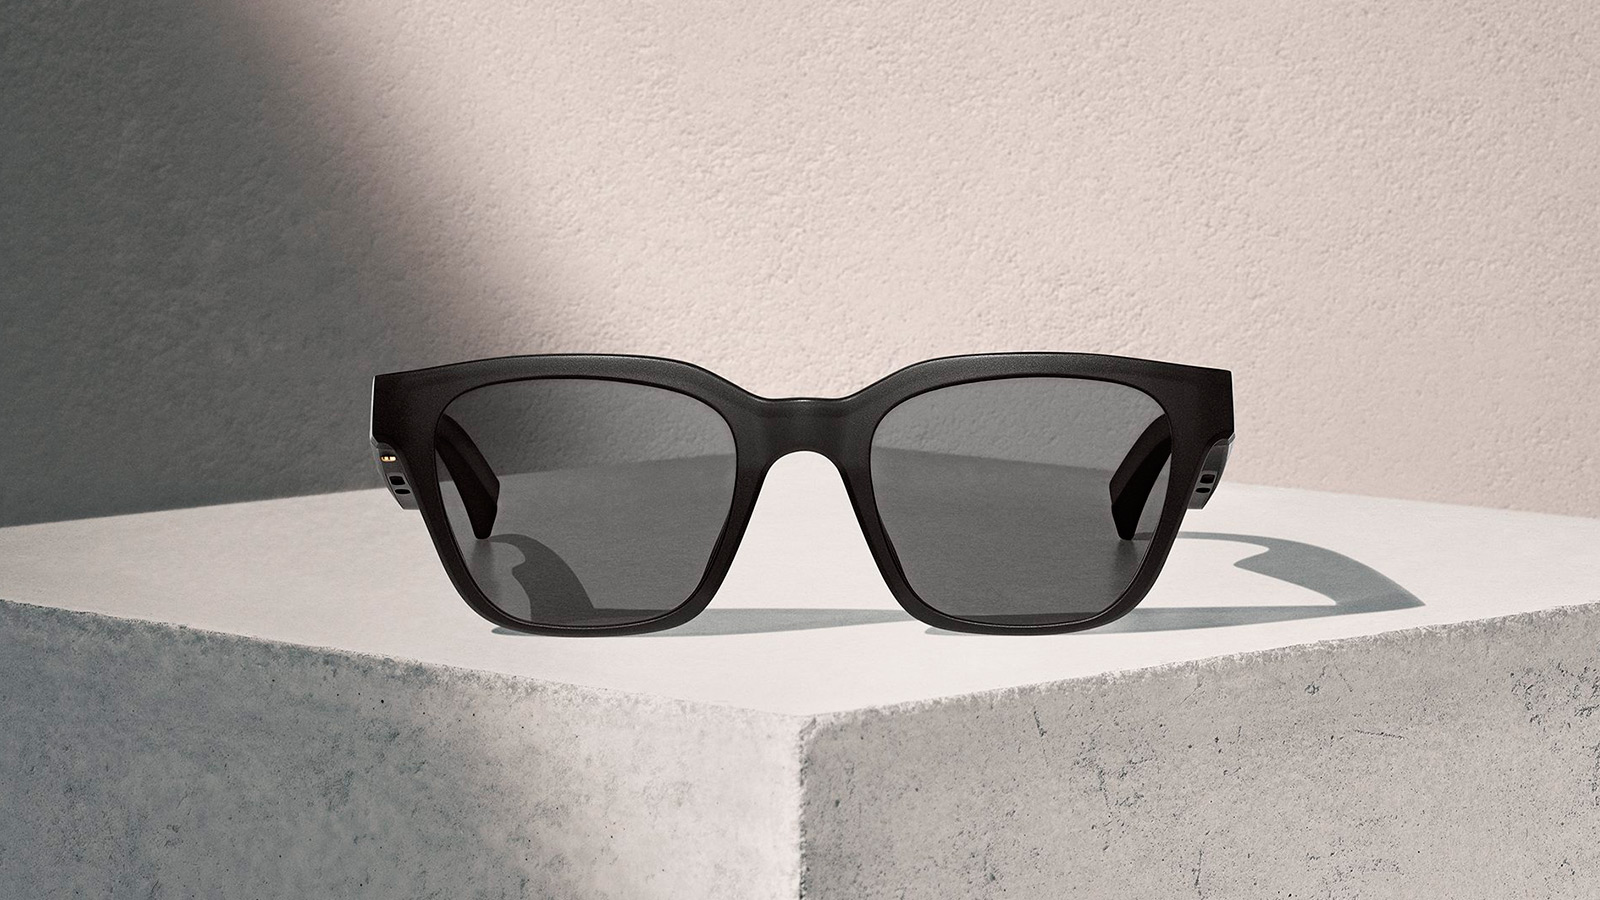 Bose-Frames-Audio-Augmented-Reality-Sunglasses